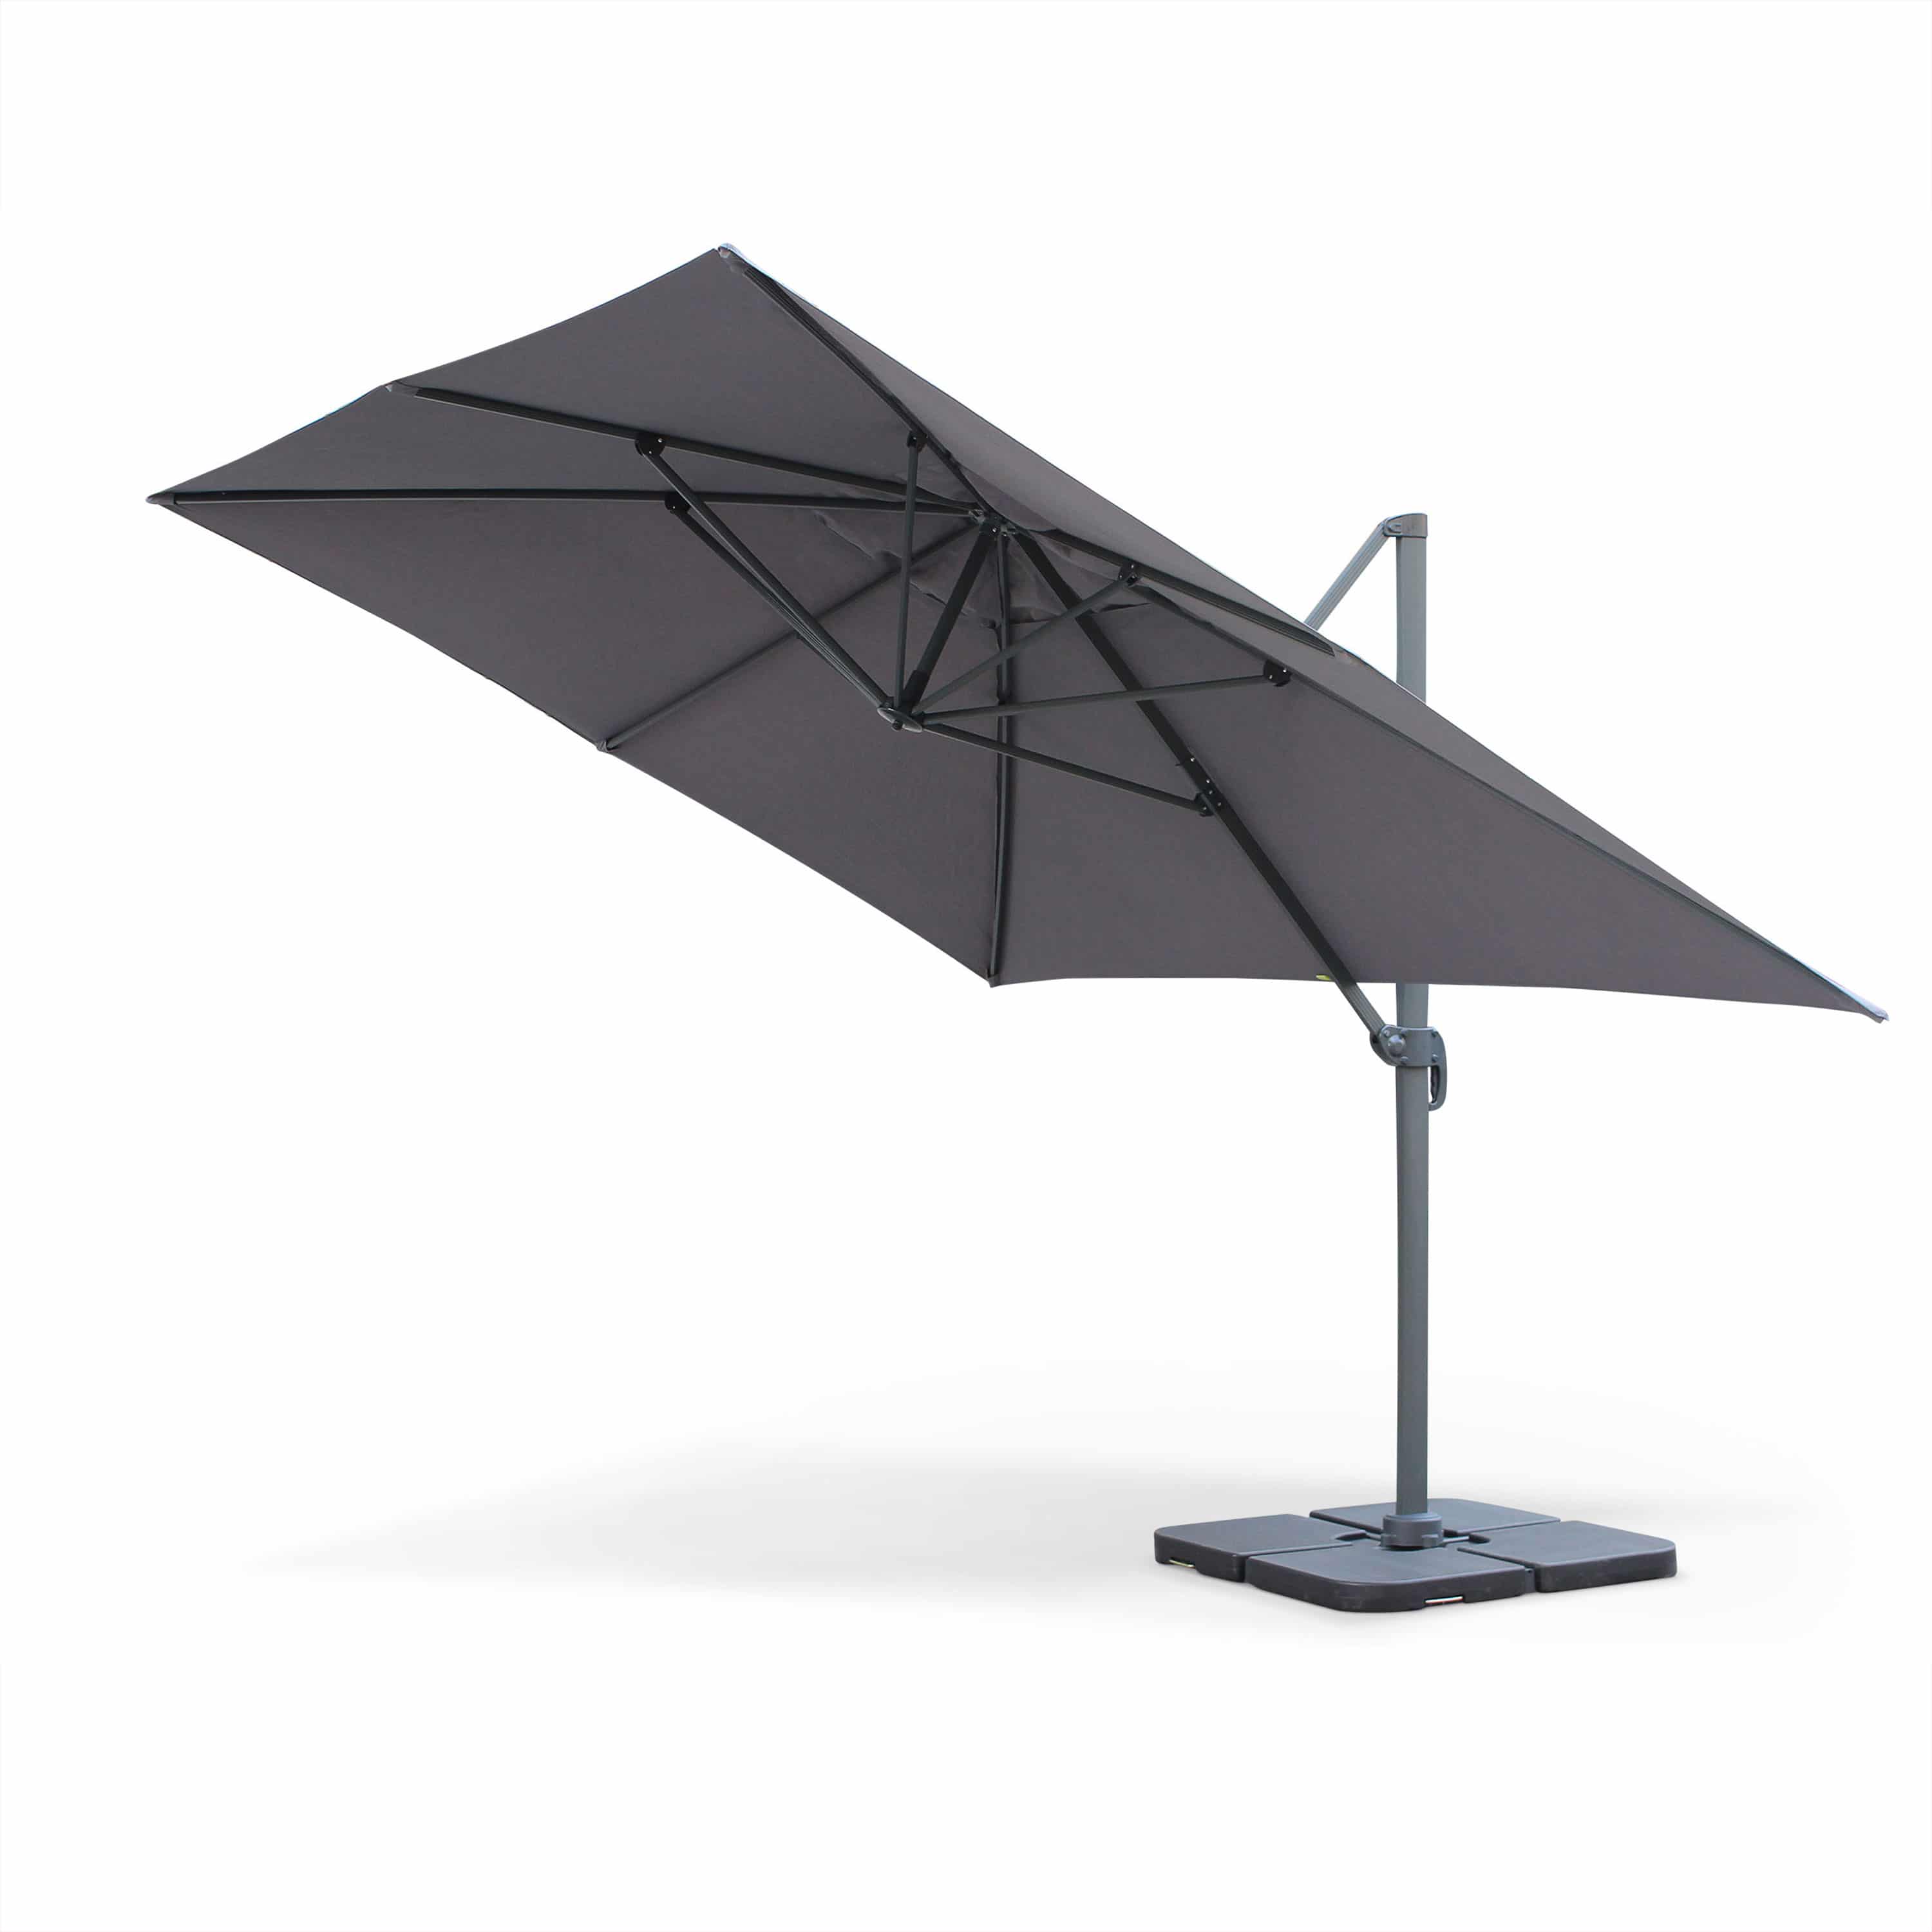 Rectangular Cantilever Outdoor Umbrella Parasol 3x4m in Aluminium Charcoal Grey Anthracite Grey